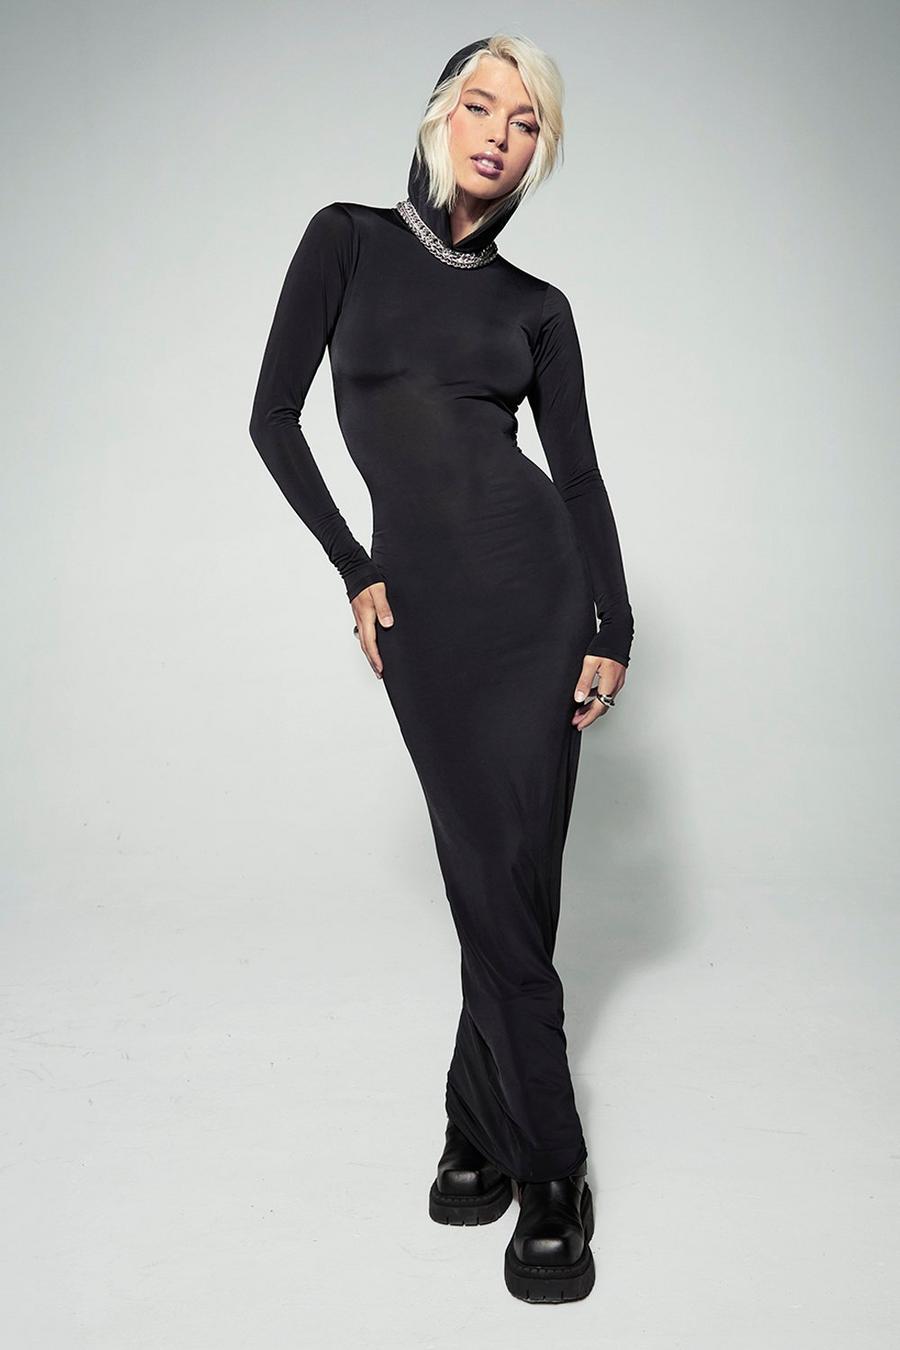 Black Kourtney Kardashian Barker Slinky Hooded Maxi Dress